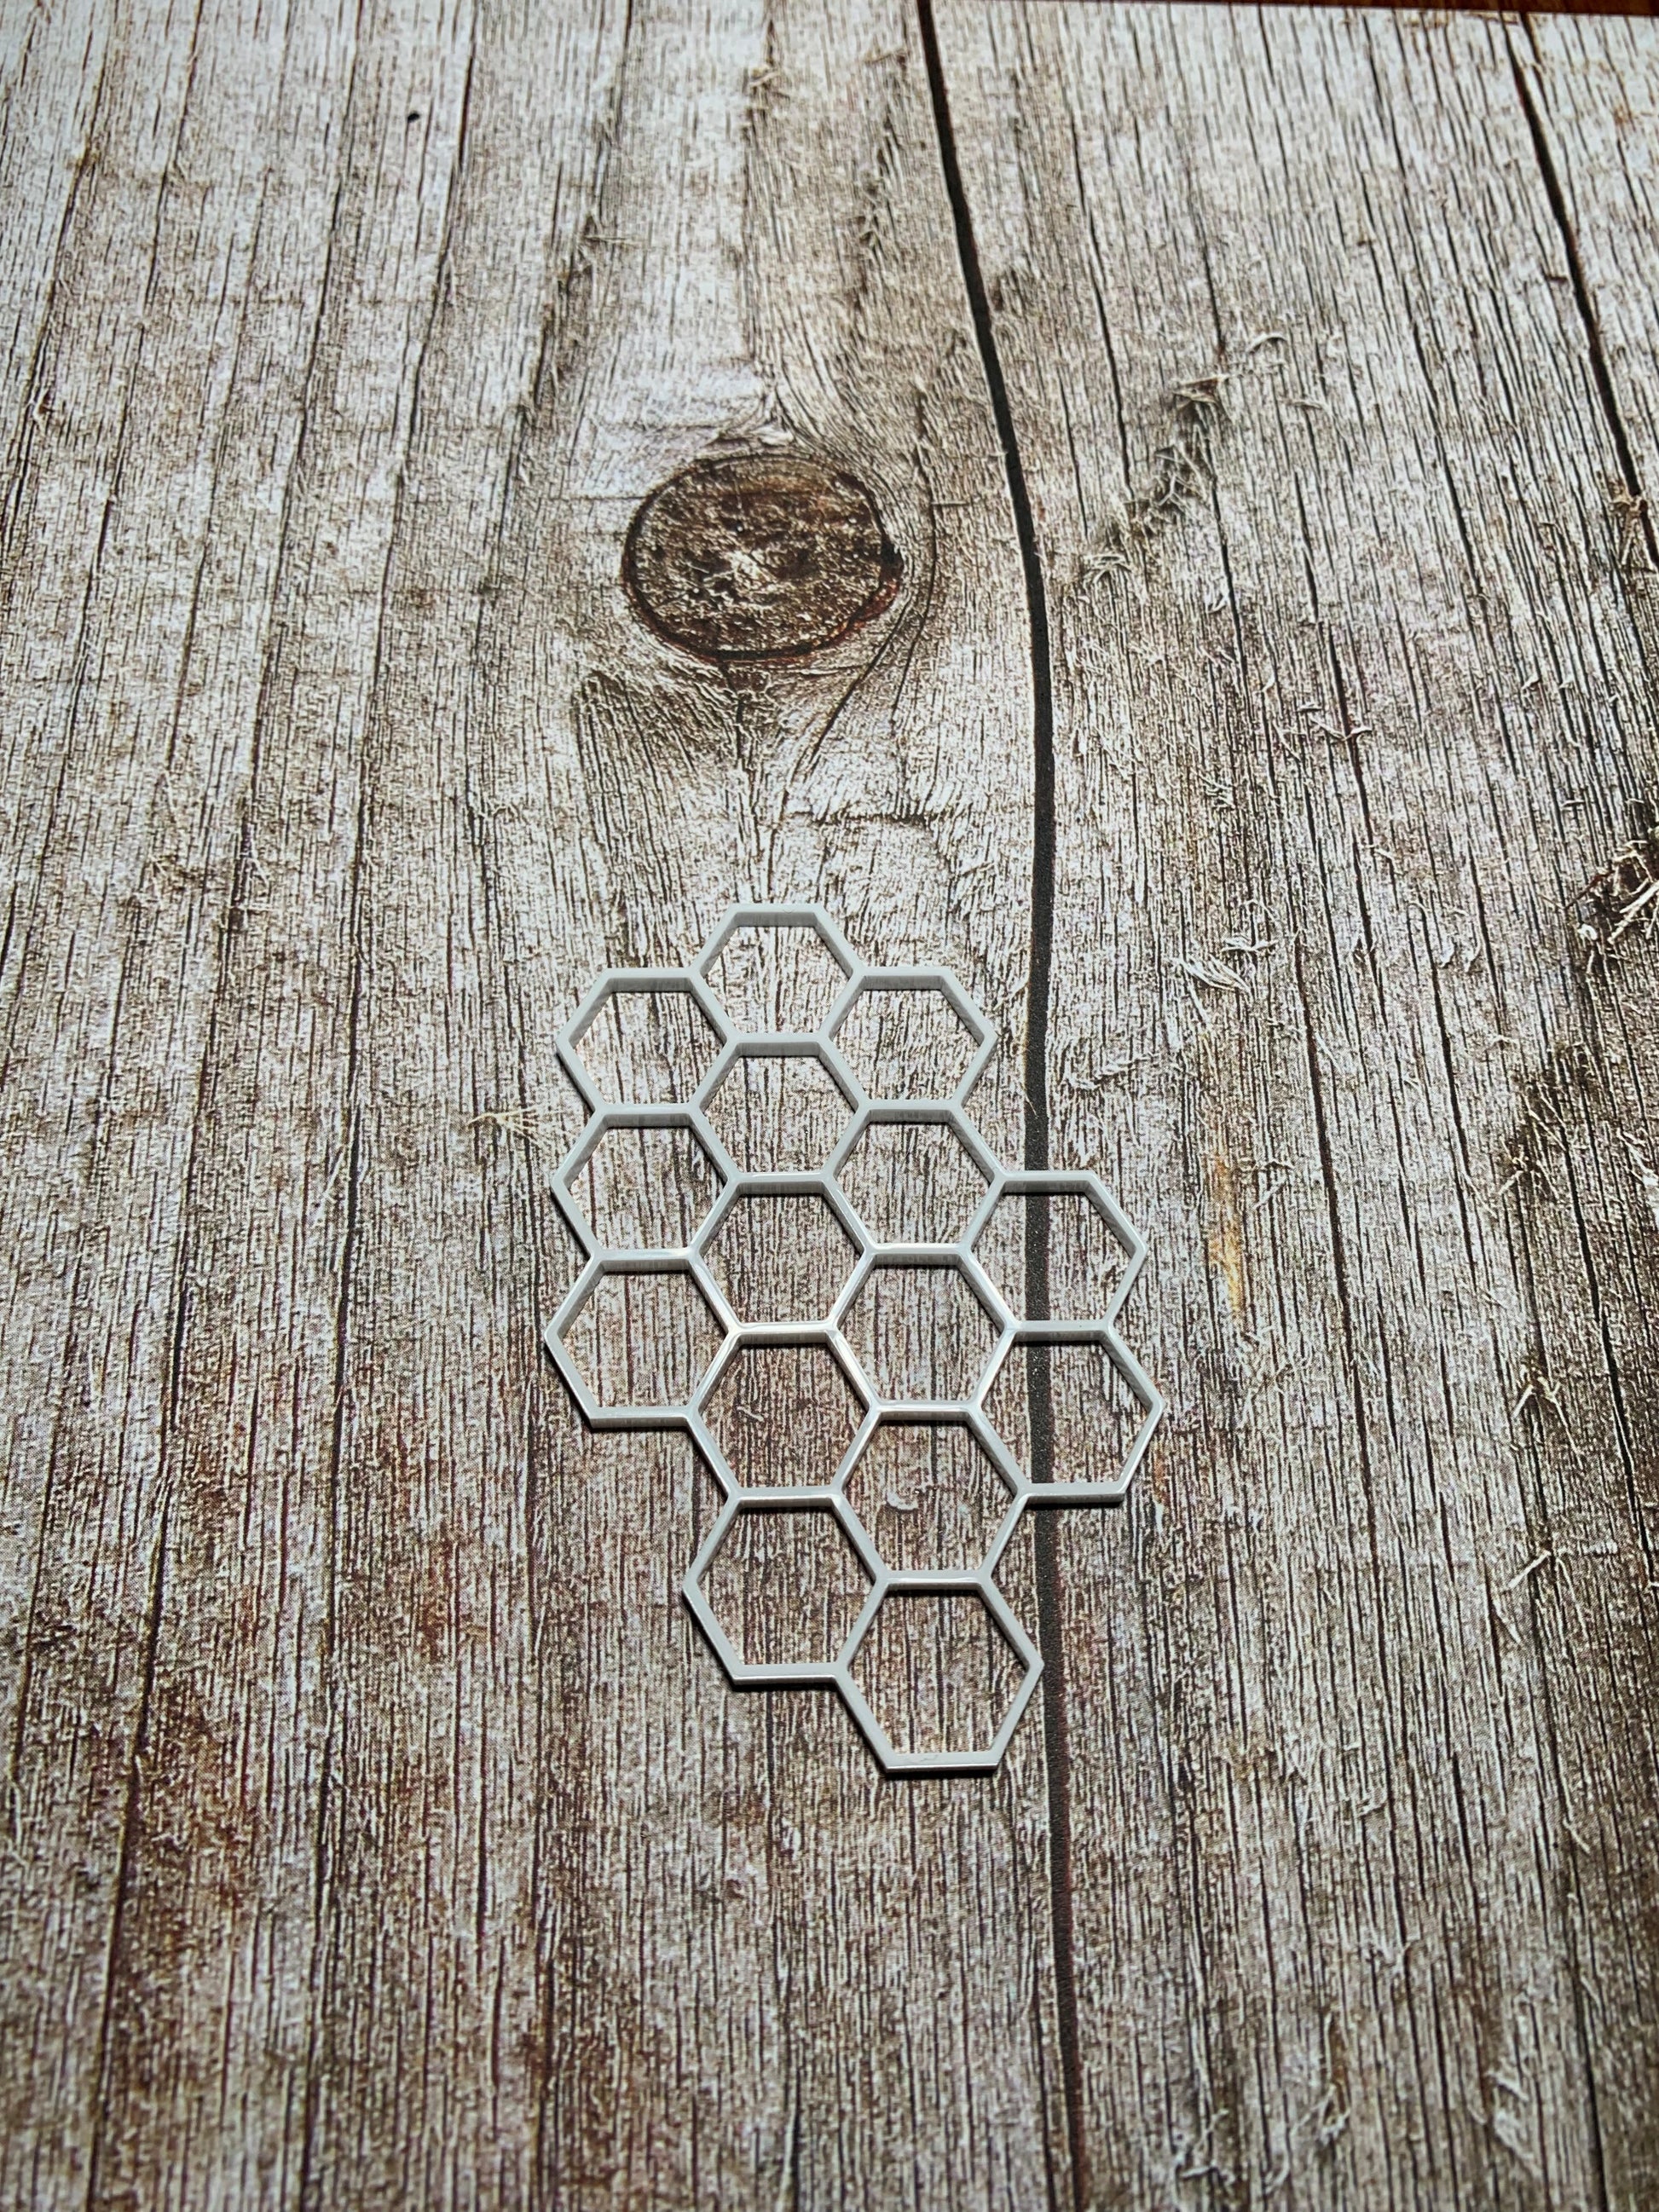 Honeycomb outline - Creative Designs By Kari